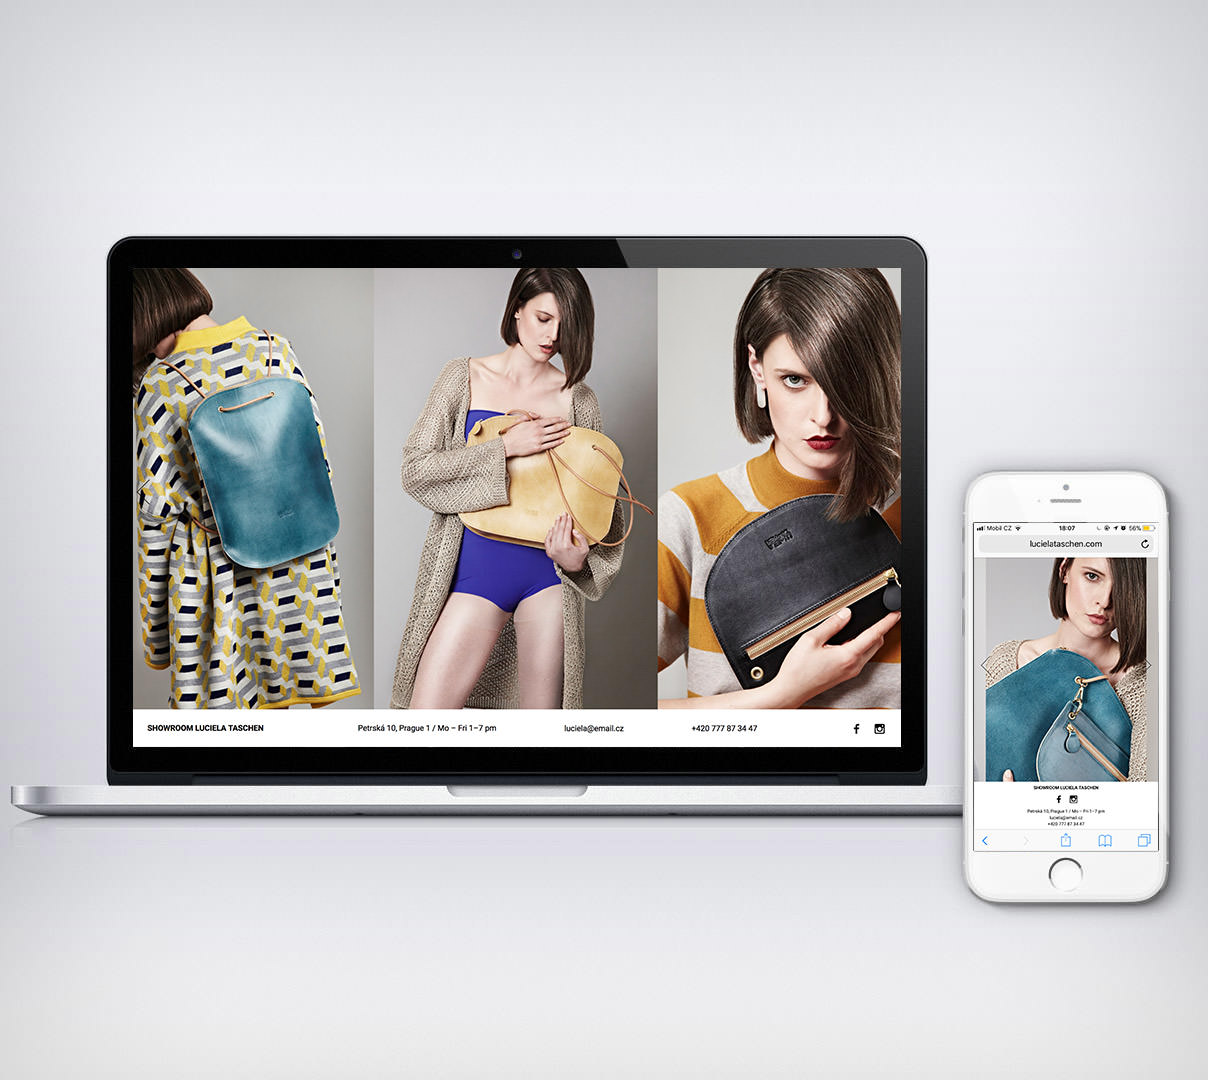 Luciela Taschen web design preview